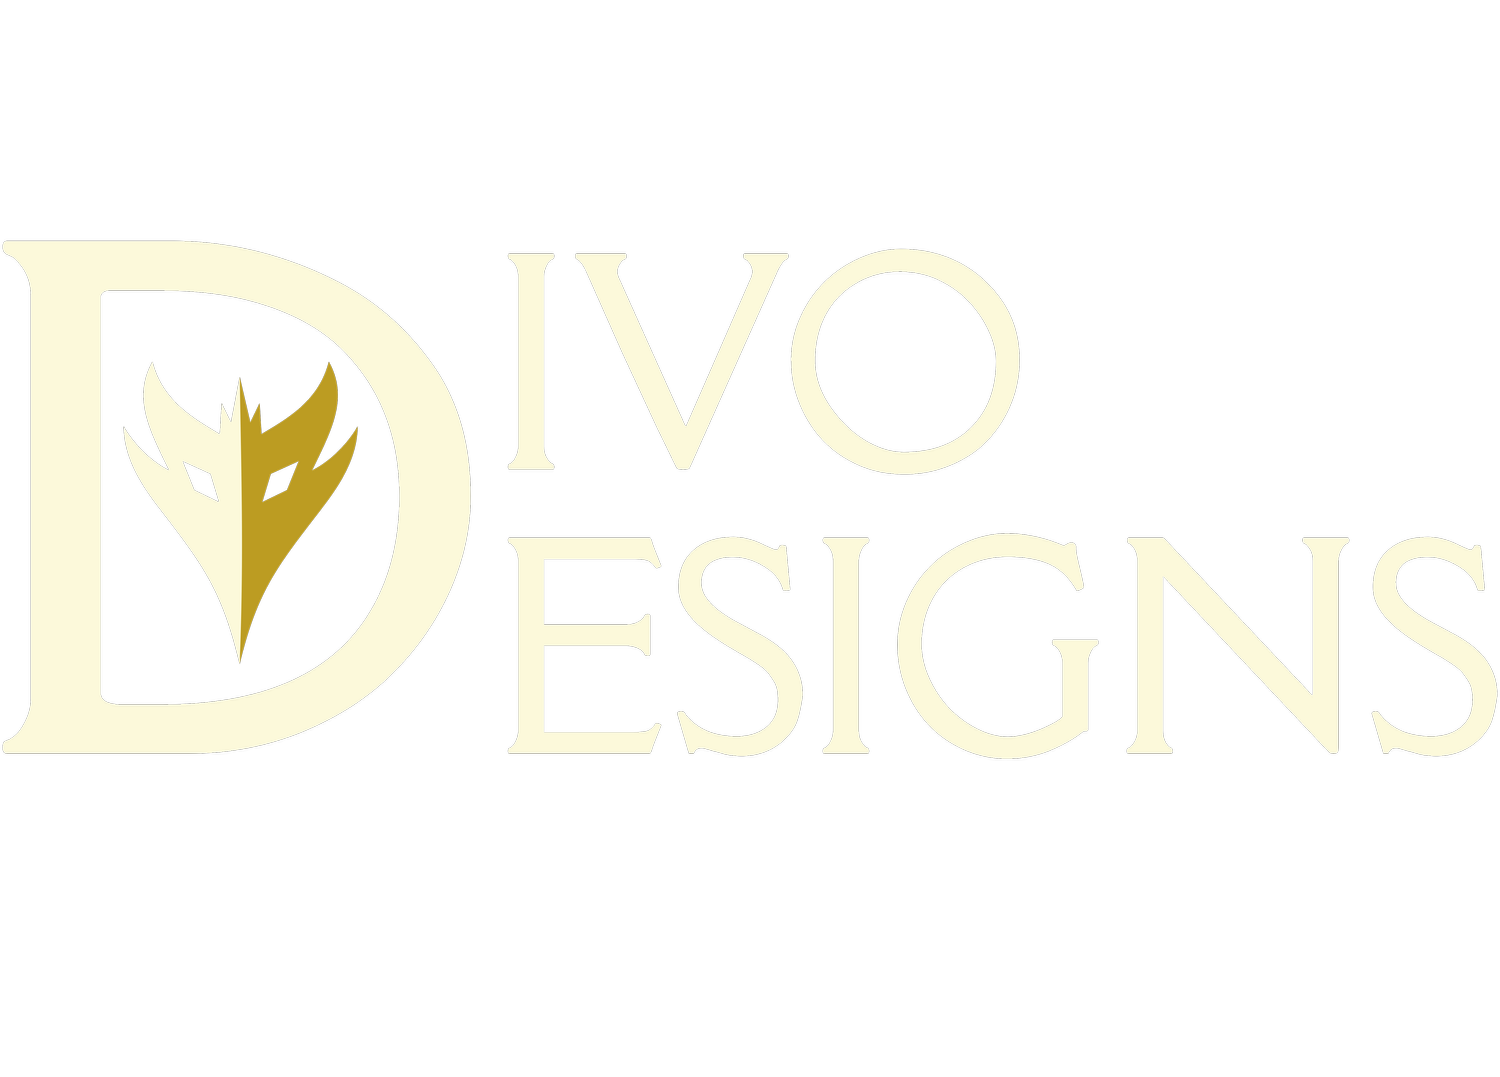 Divo Designs